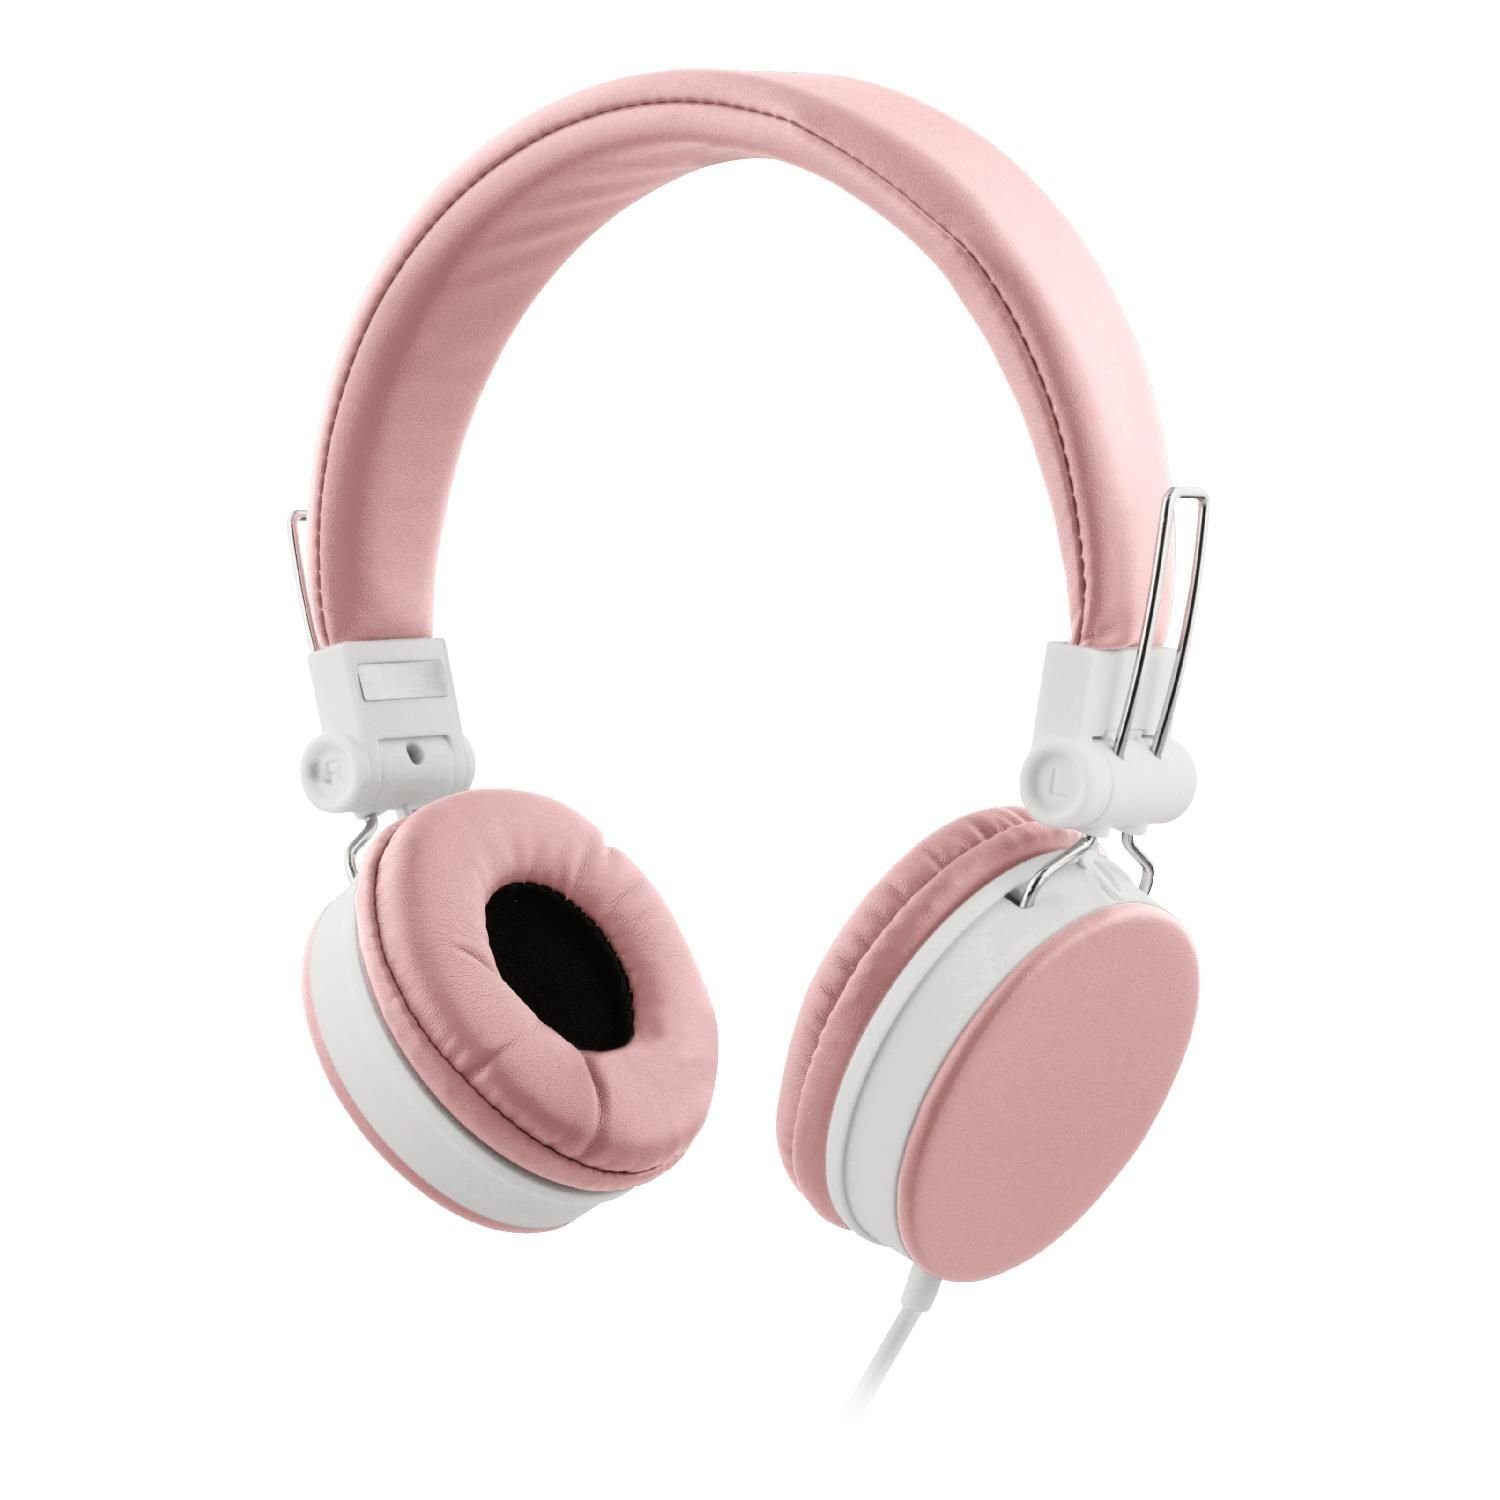 / (integriertes Kopfhörer 3.5mm Ohrpolster rosa, Headset, 1,2m faltbares Kabel Herstellergarantie) Jahre STREETZ inkl. On-Ear-Kopfhörer pink Mikrofon, 5 Klinkenanschluss